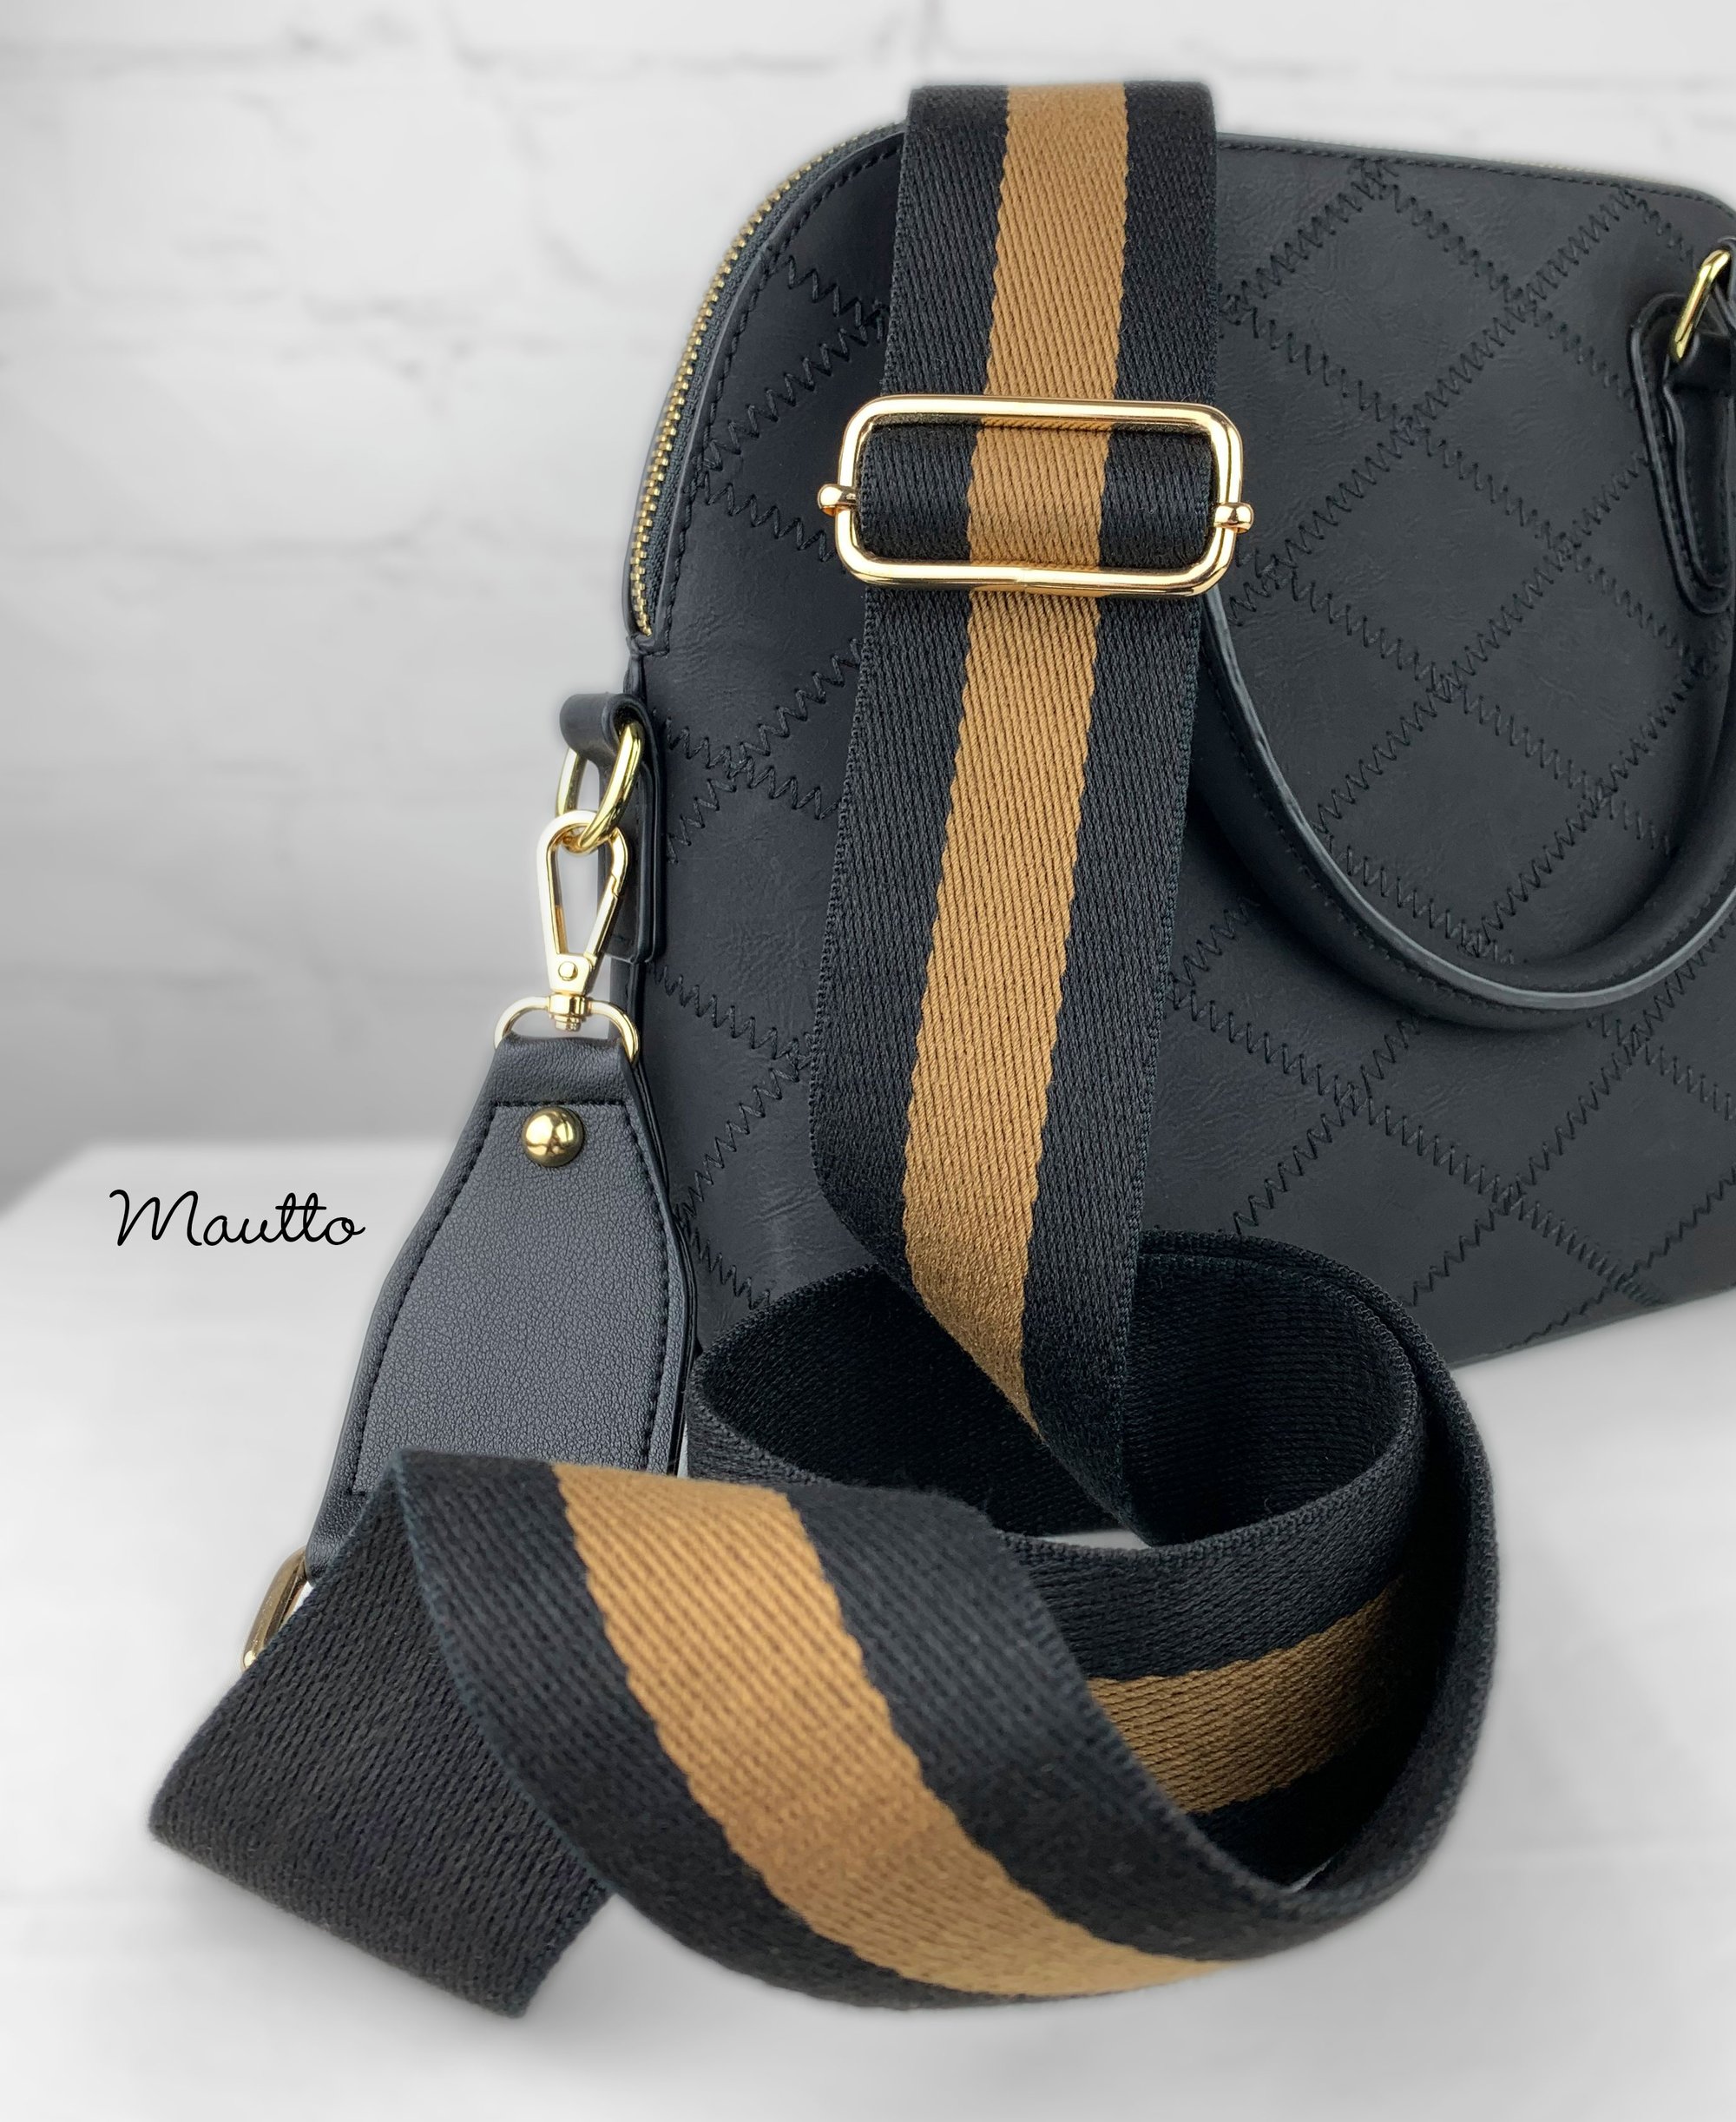 Black & Gold Strap for Bags - 2 Extra Wide/Comfy Cotton - Adjustable  Shoulder to Crossbody Length